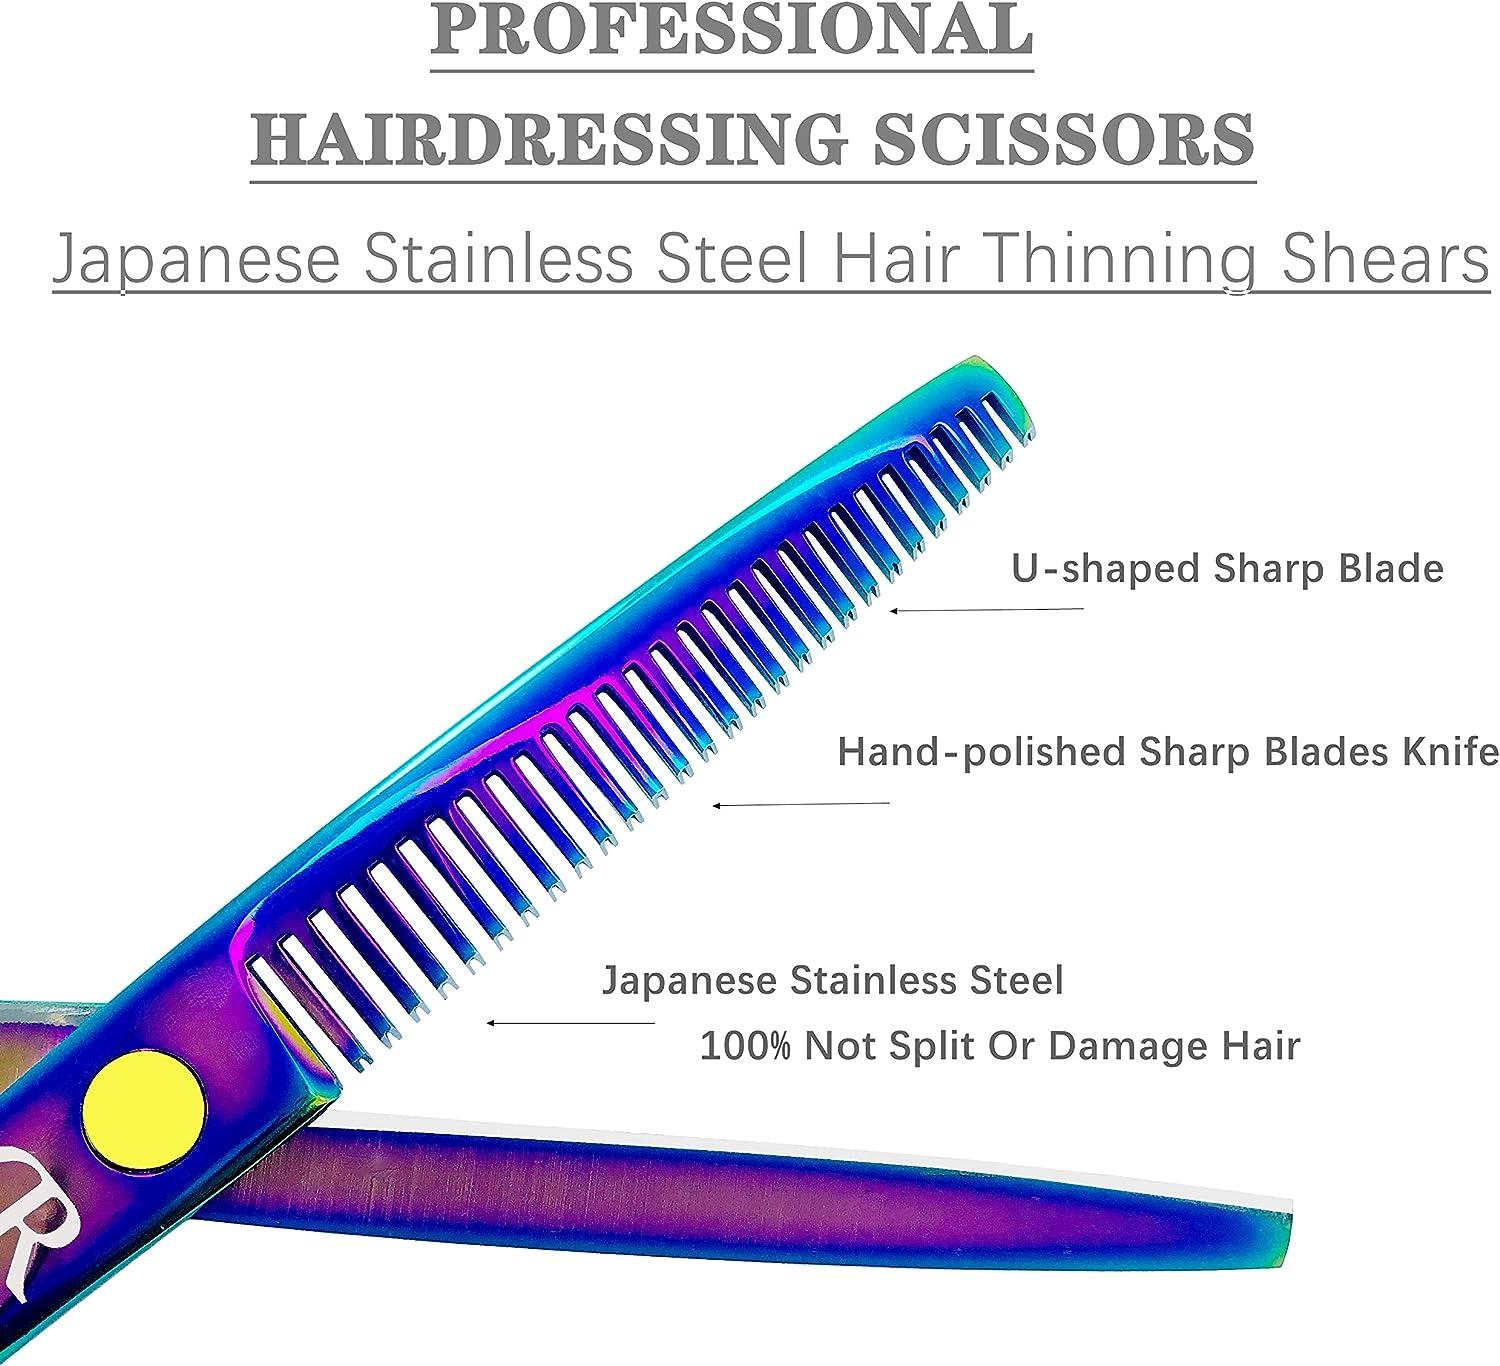 Hair Cutting Scissors Professional Sharp Barber Shears Salon Thinning / Texturizing Scissors 6 inch Hairdressing Scissors for Women Men Japanese